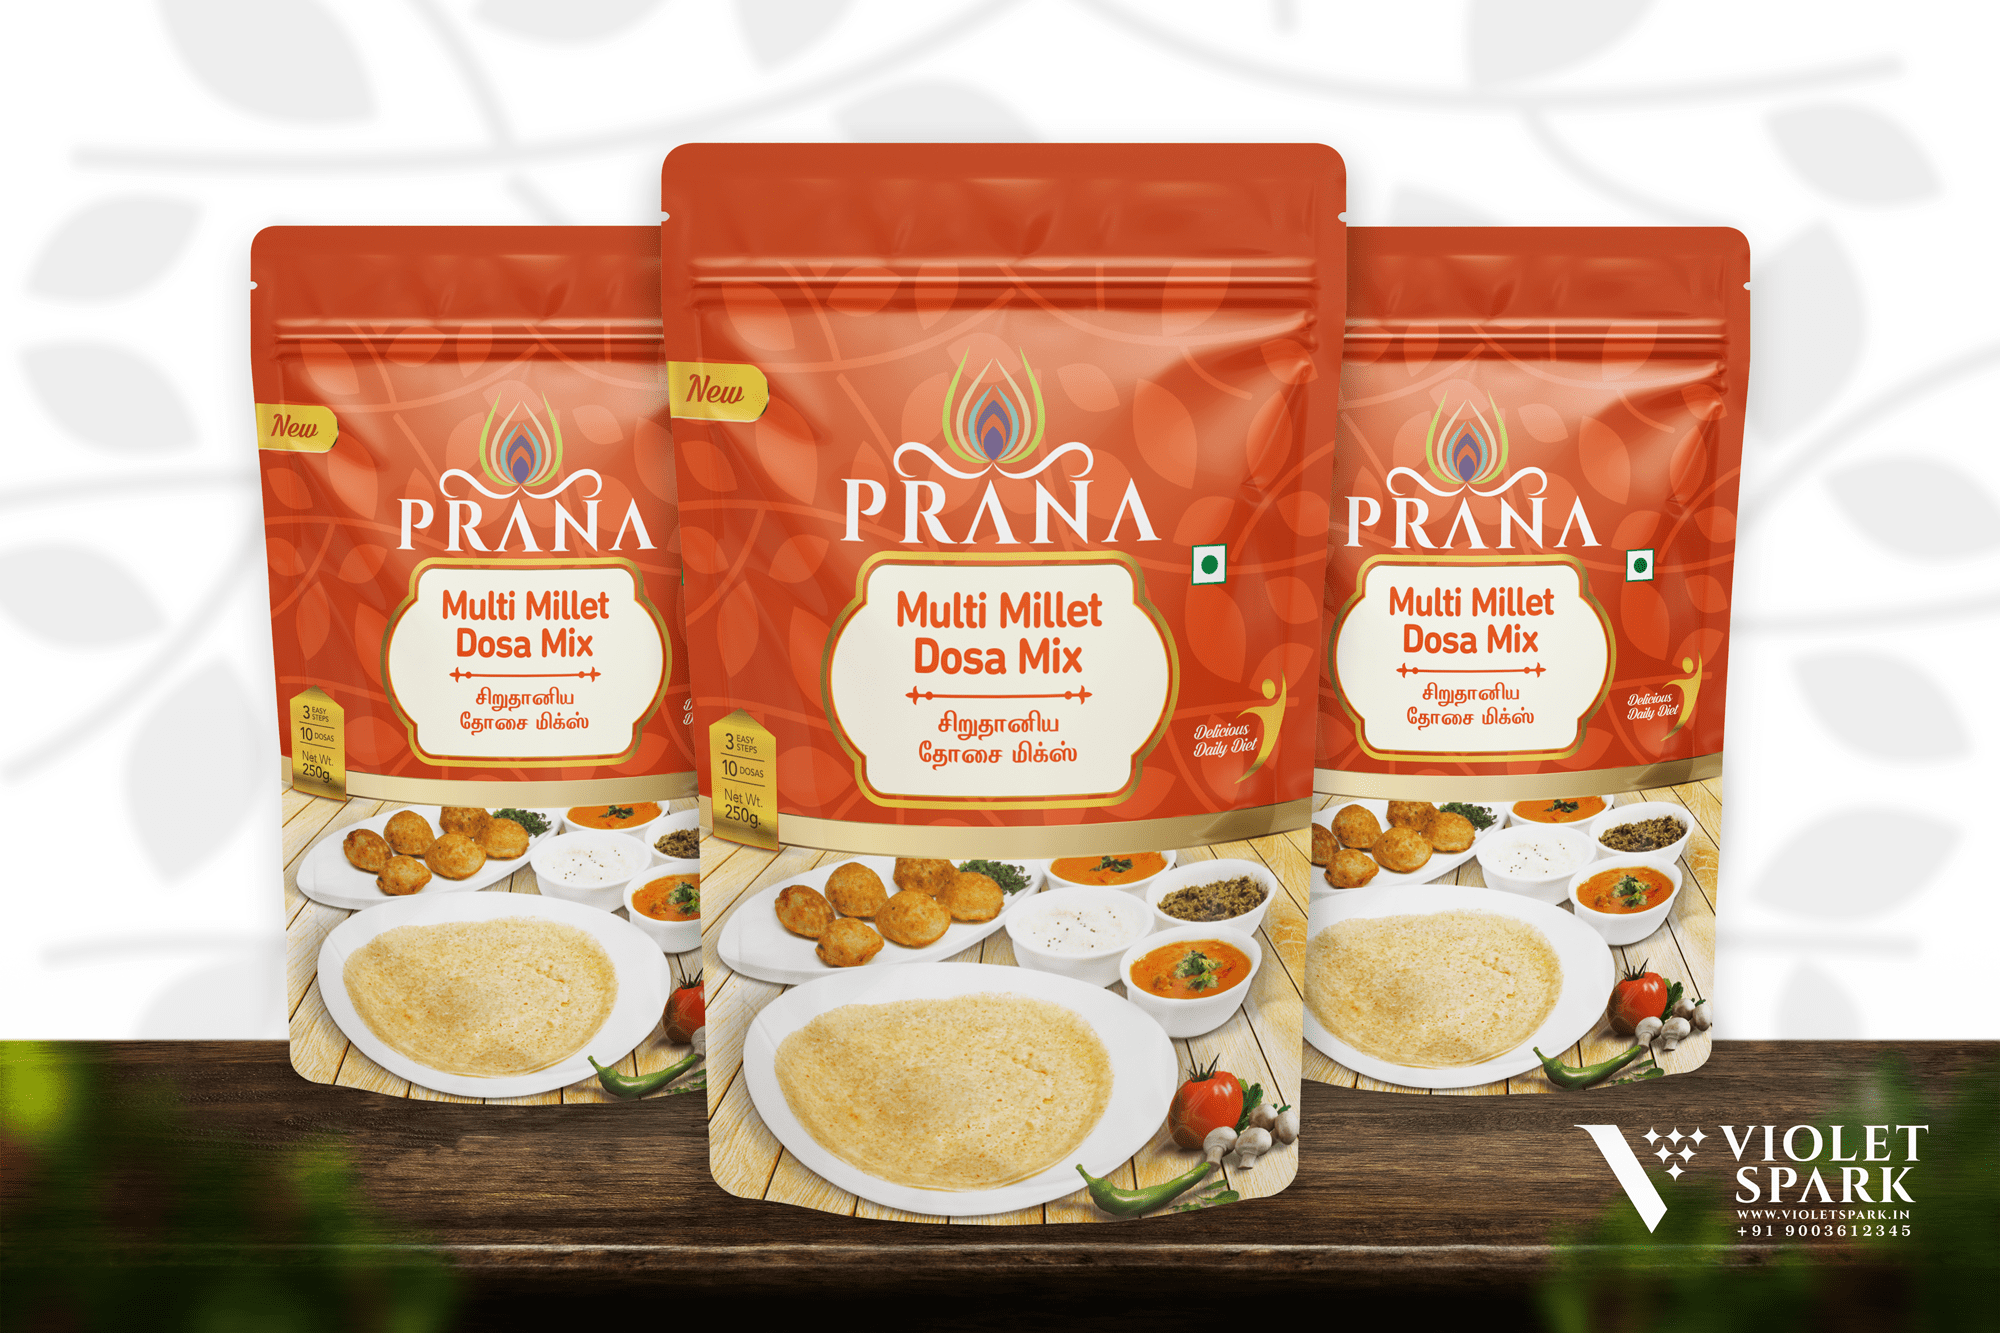 Prana Millet Dosa Mix Branding Packaging Design Digital Marketing in Coimbatore by Violet Spark